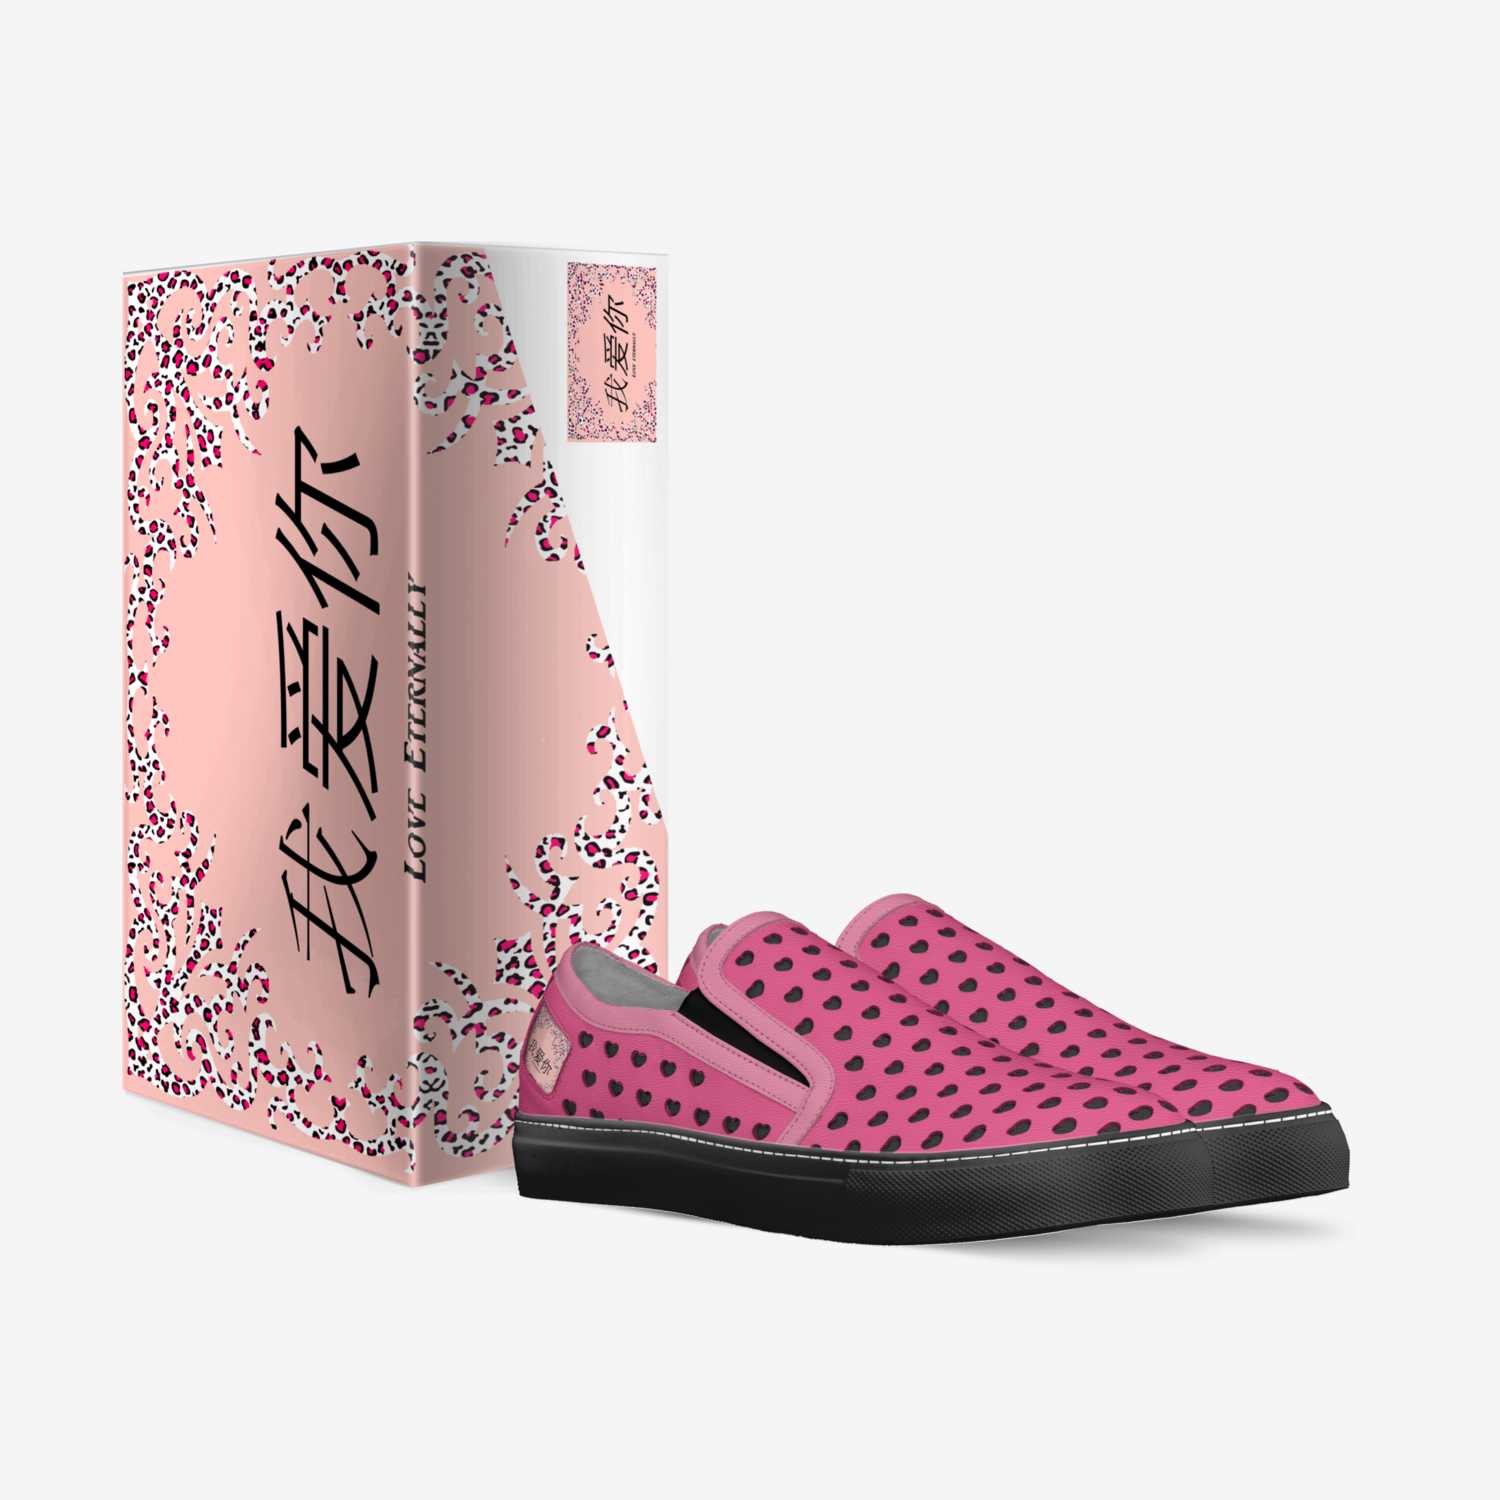 Wo Ai Ni Pink custom made in Italy shoes by Aomoji Kei | Box view